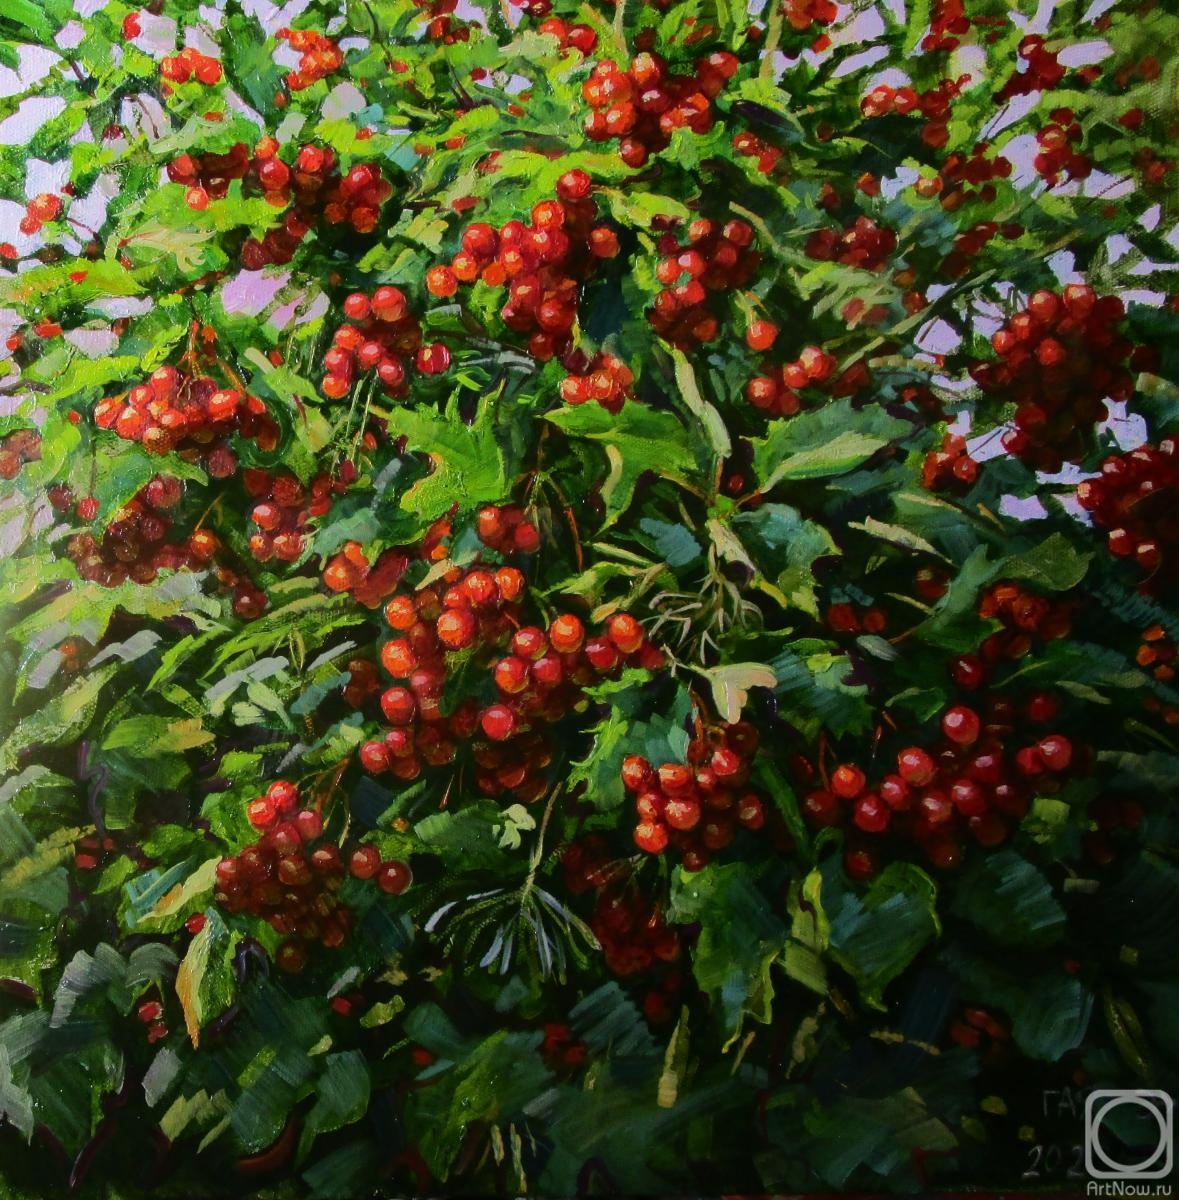 Dobrovolskaya Gayane. Viburnum bush with ripe berries